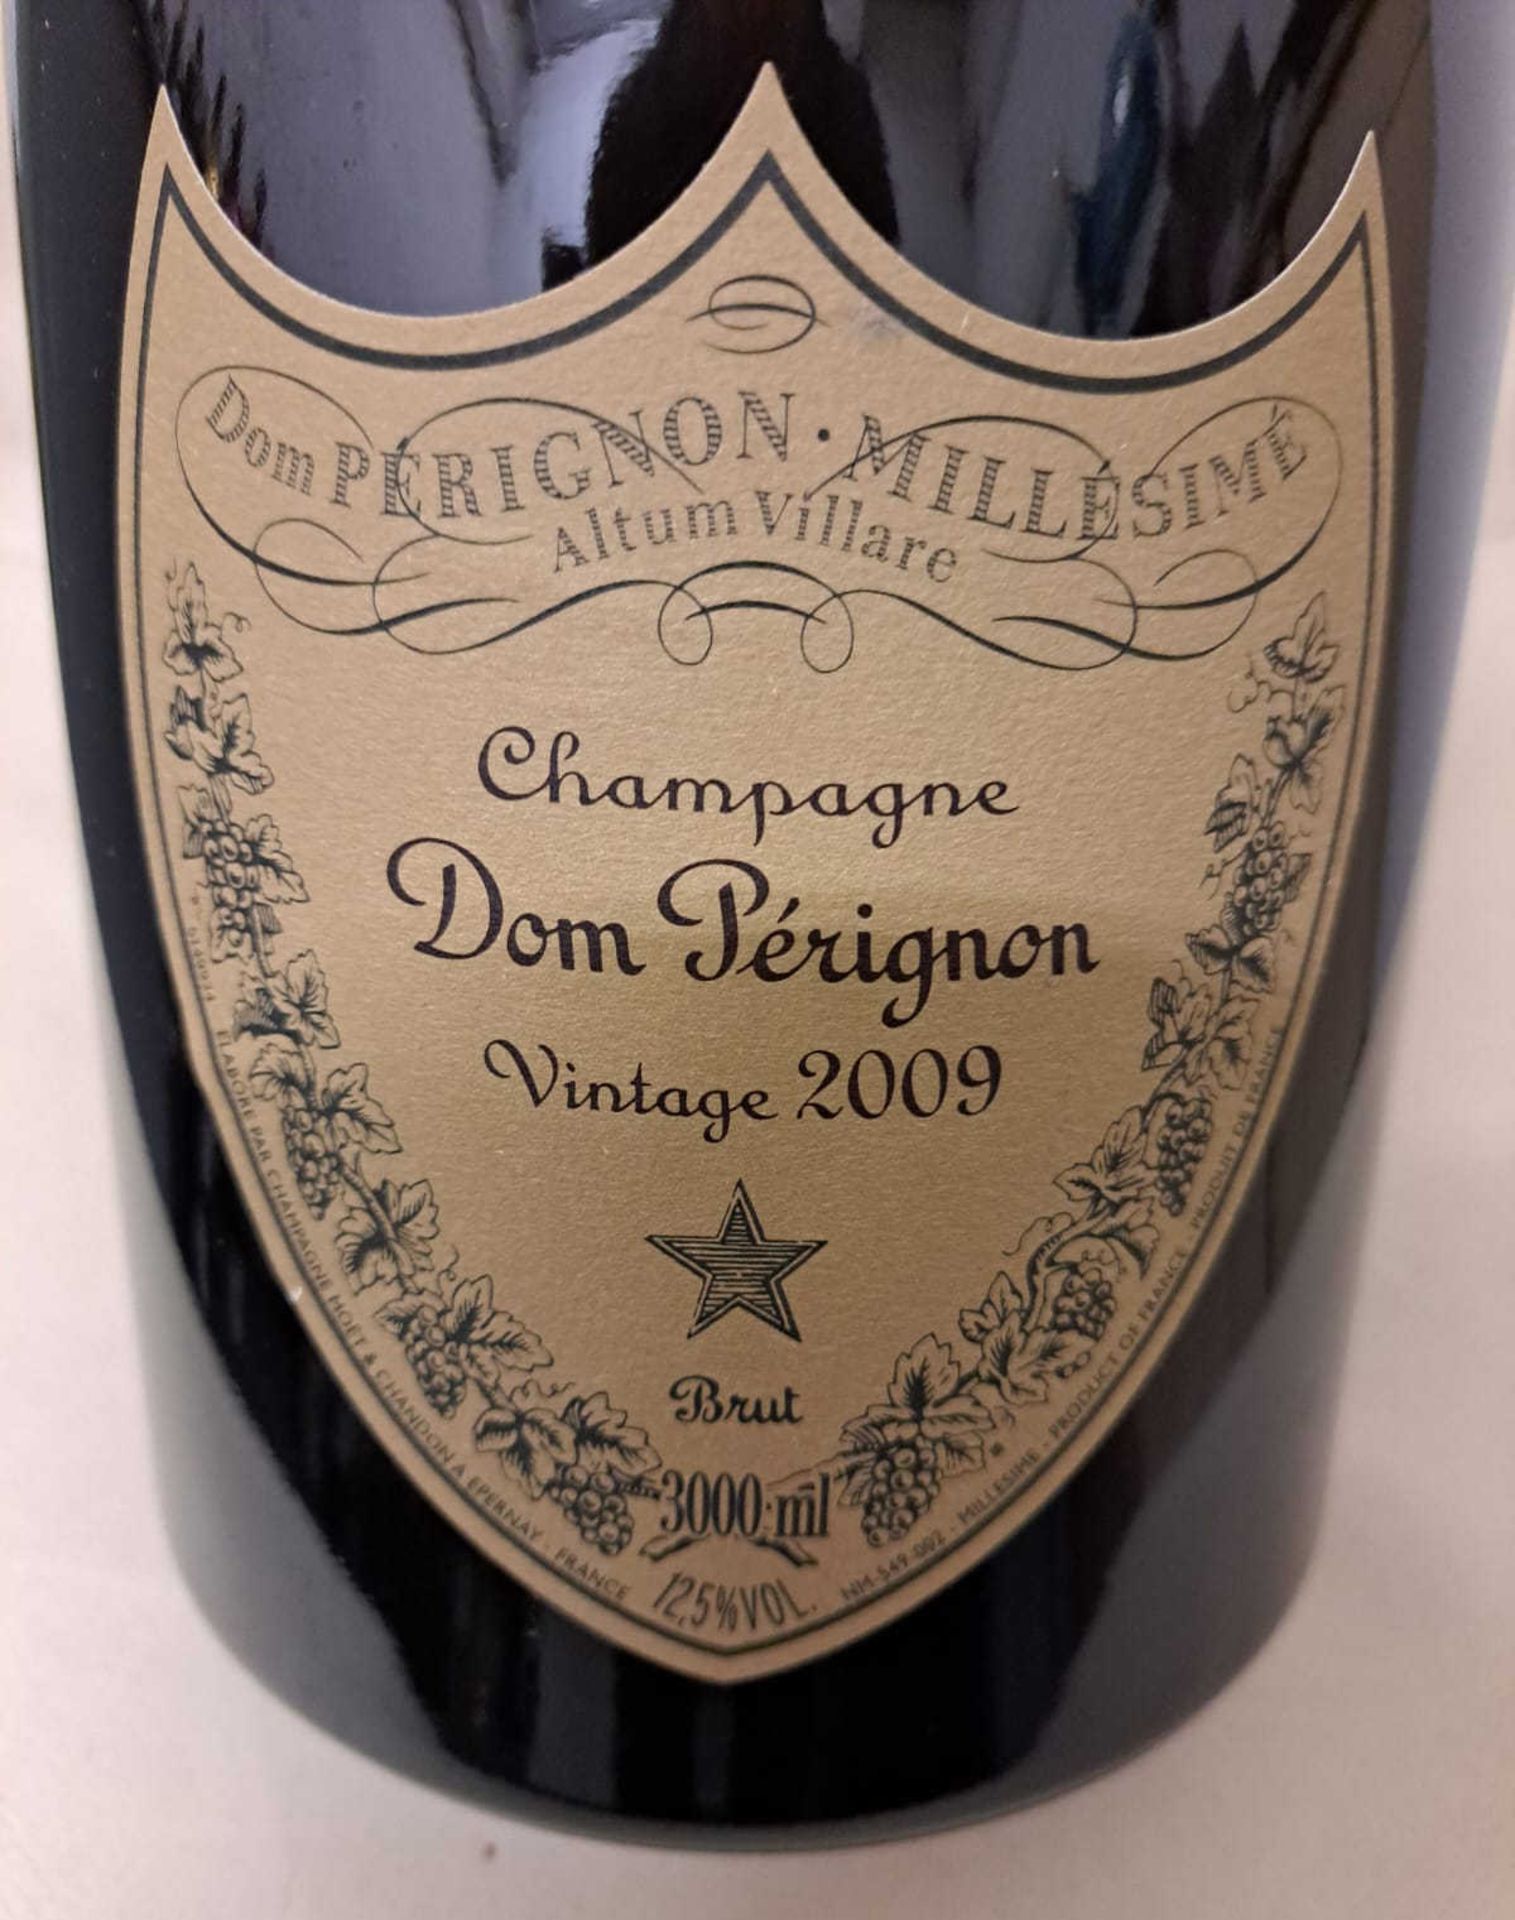 1 x Jeroboam of 2009 Dom Perignon Vintage Champagne - Retail Price £2600 - Ref: WAS044 - CL866 - - Image 2 of 2